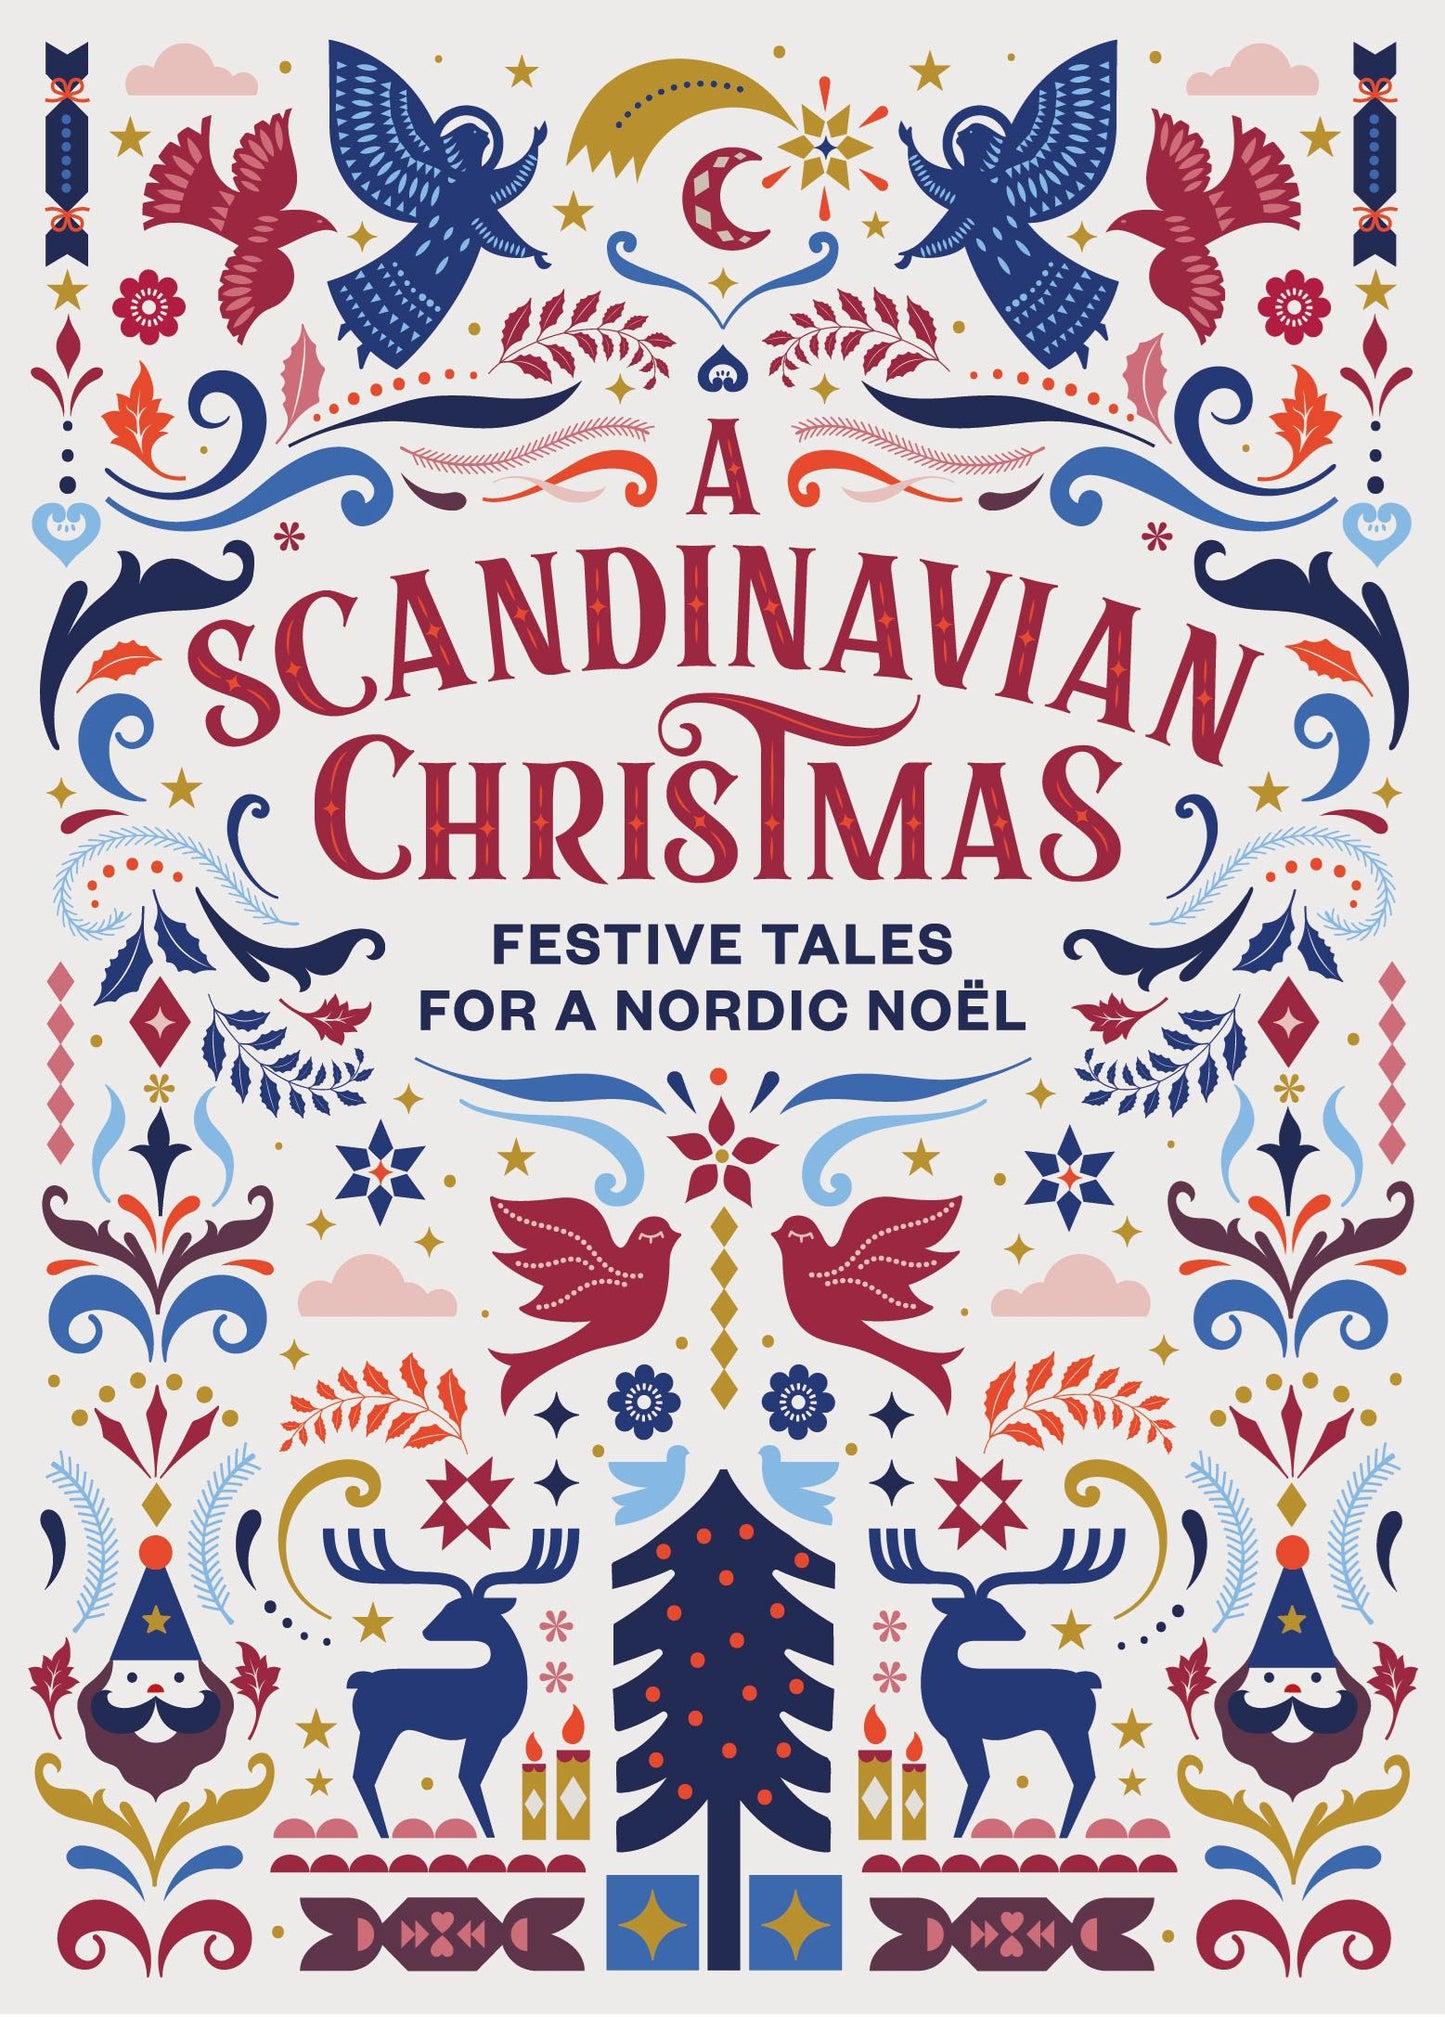 Scandinavian Christmas Festive Tales